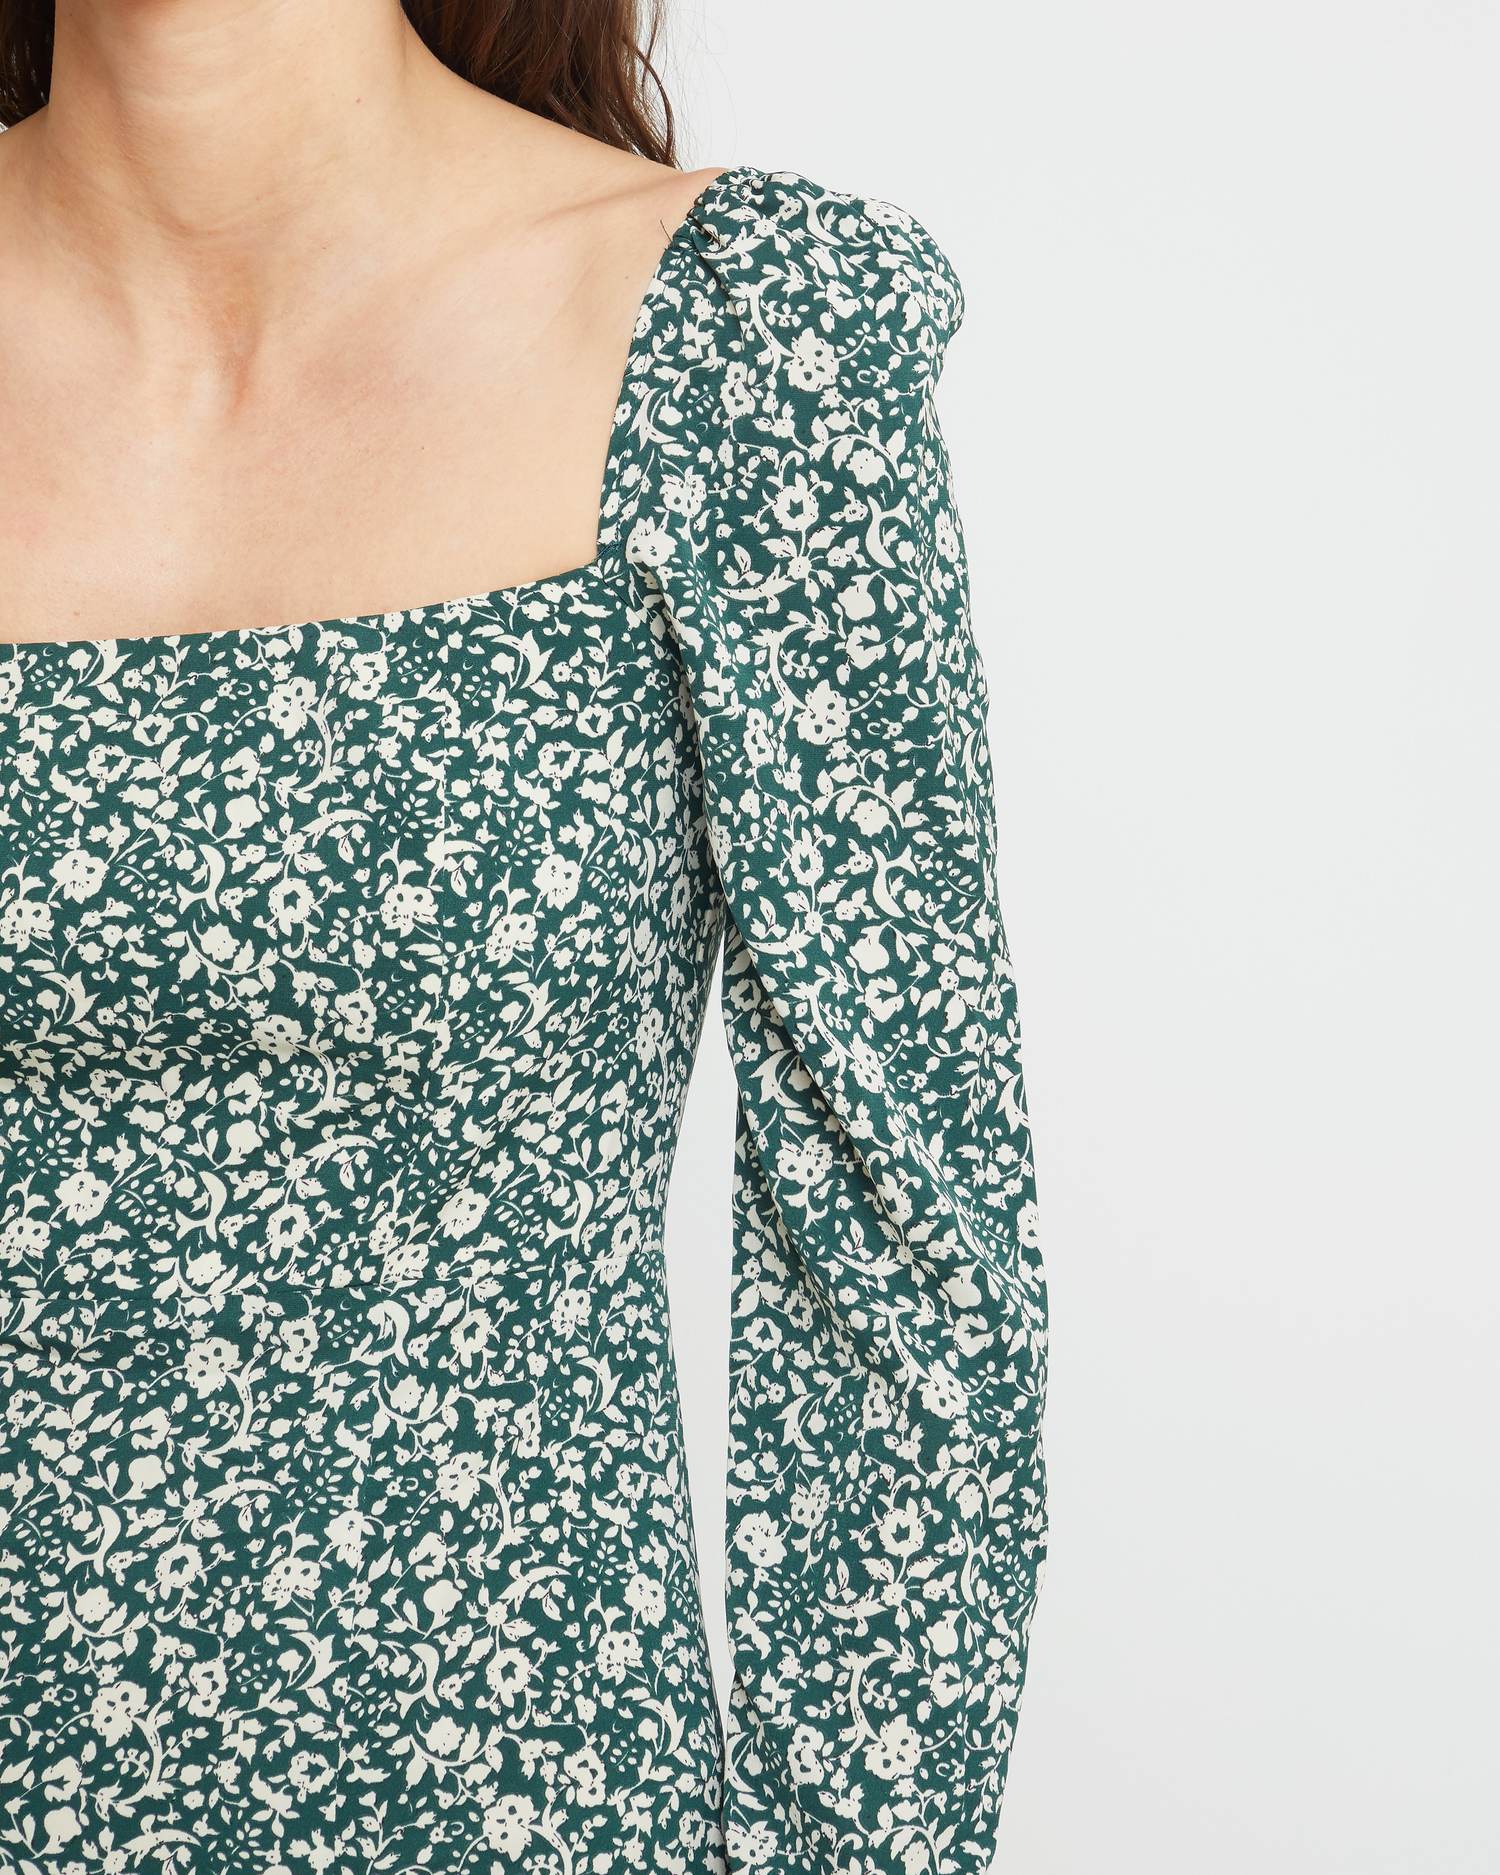 Sixth image of Lenon Dress, a green midi dress, side skirt slit, long sleeves, square neckline